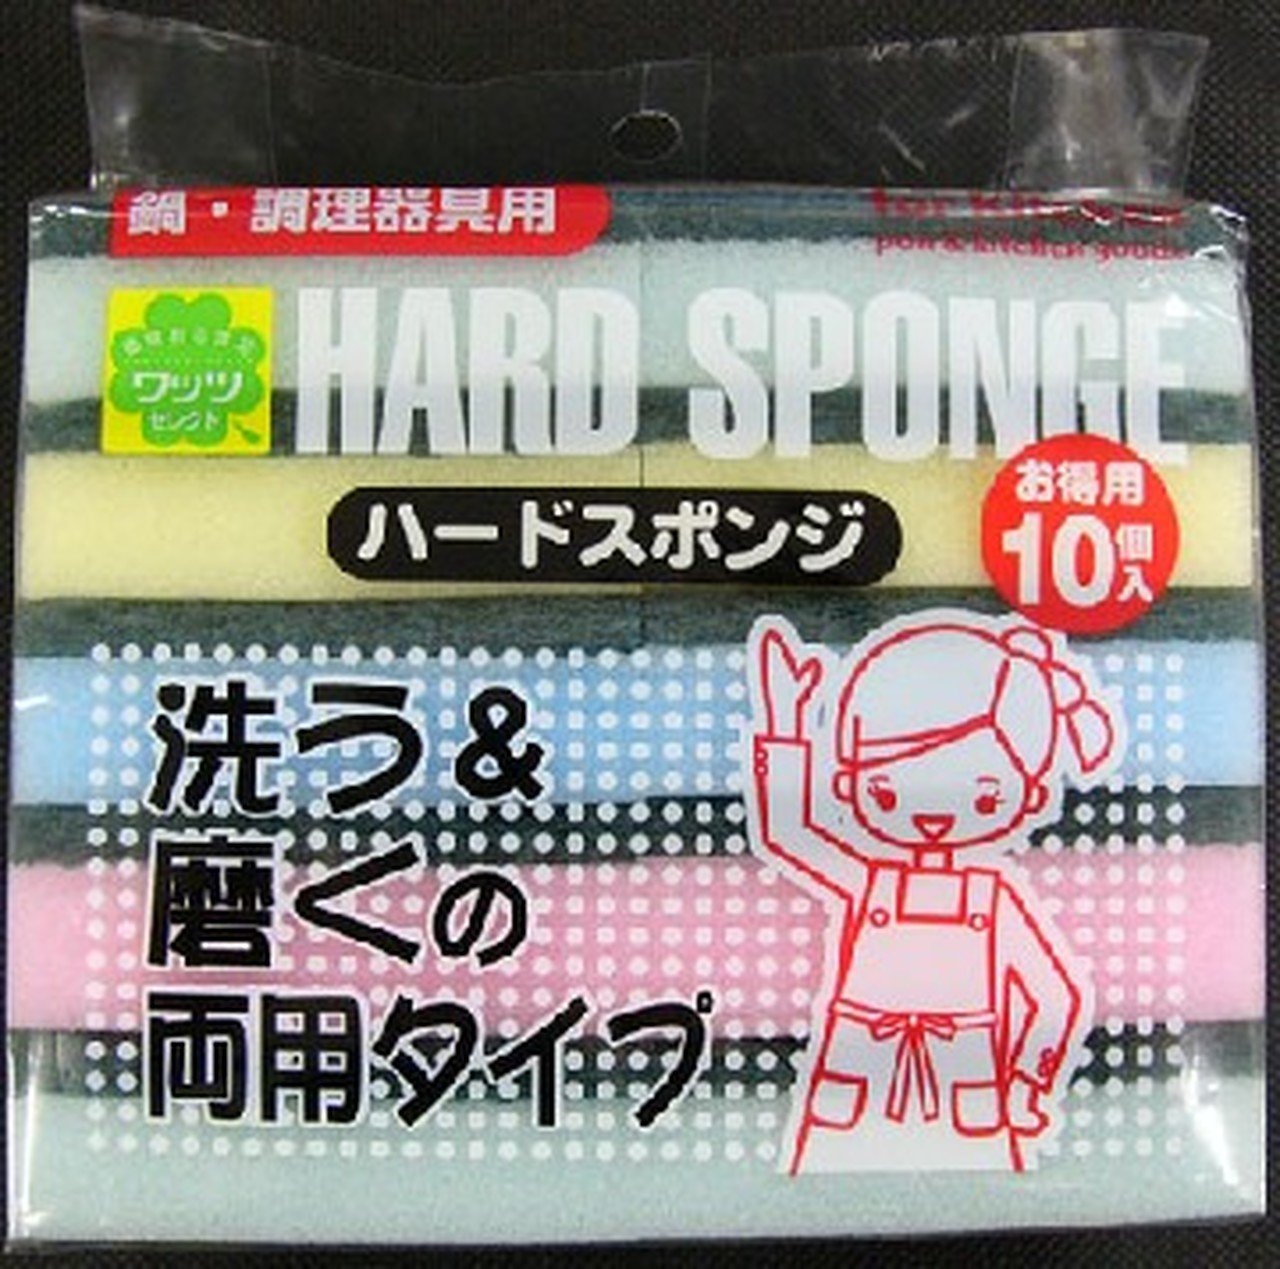 Hard Sponge 10P